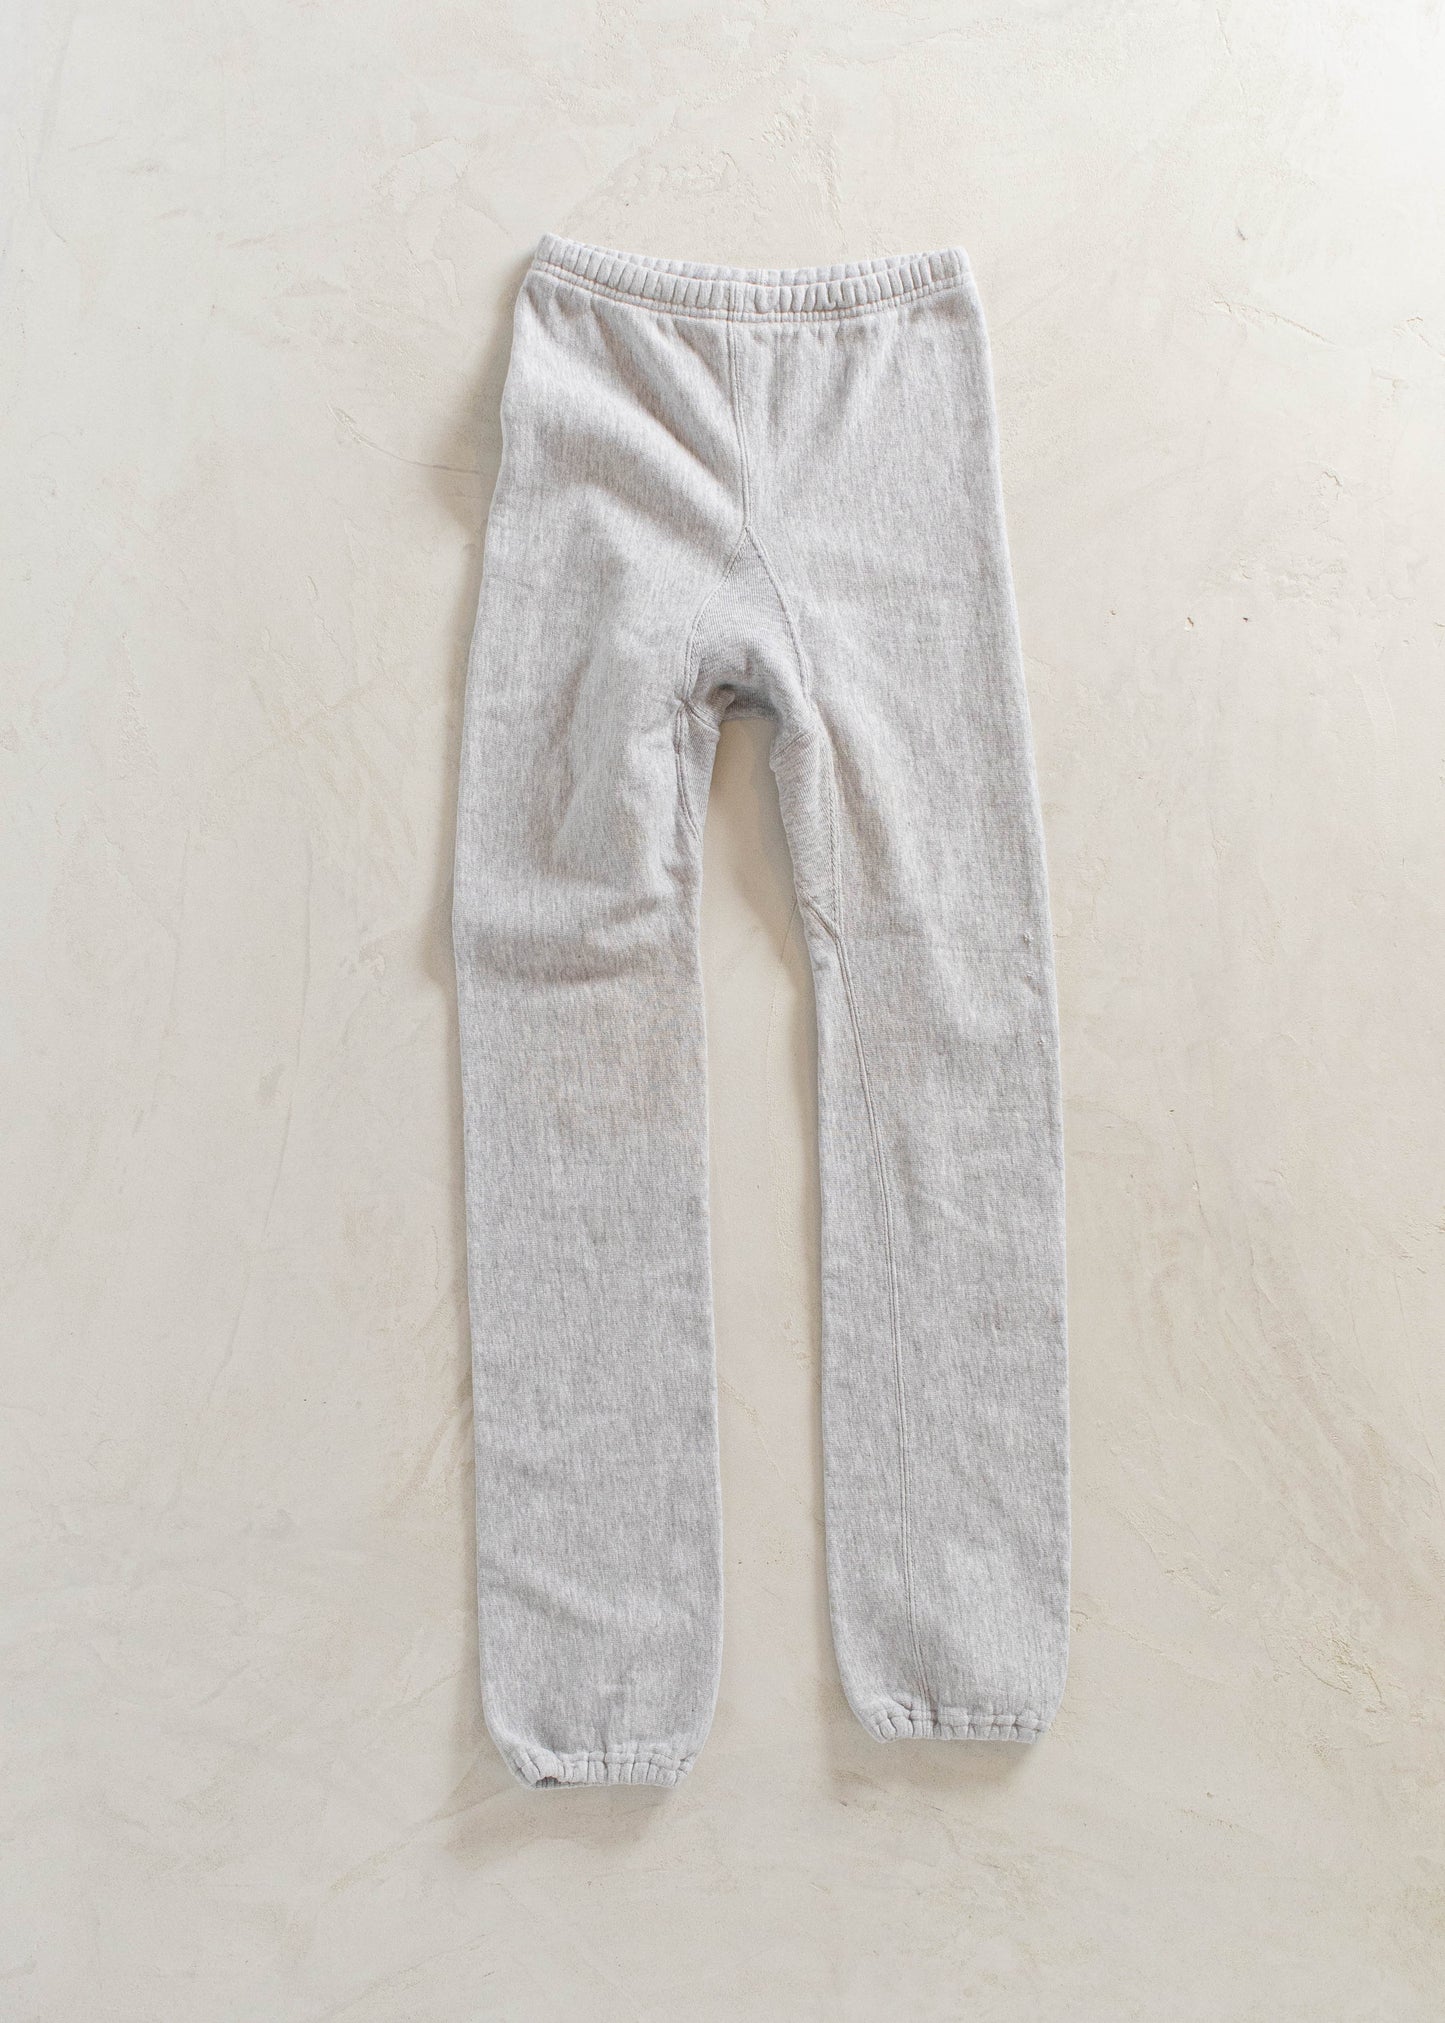 1980s Soffe Reverse Weave Drawstring Sweatpants Size 2XS/XS